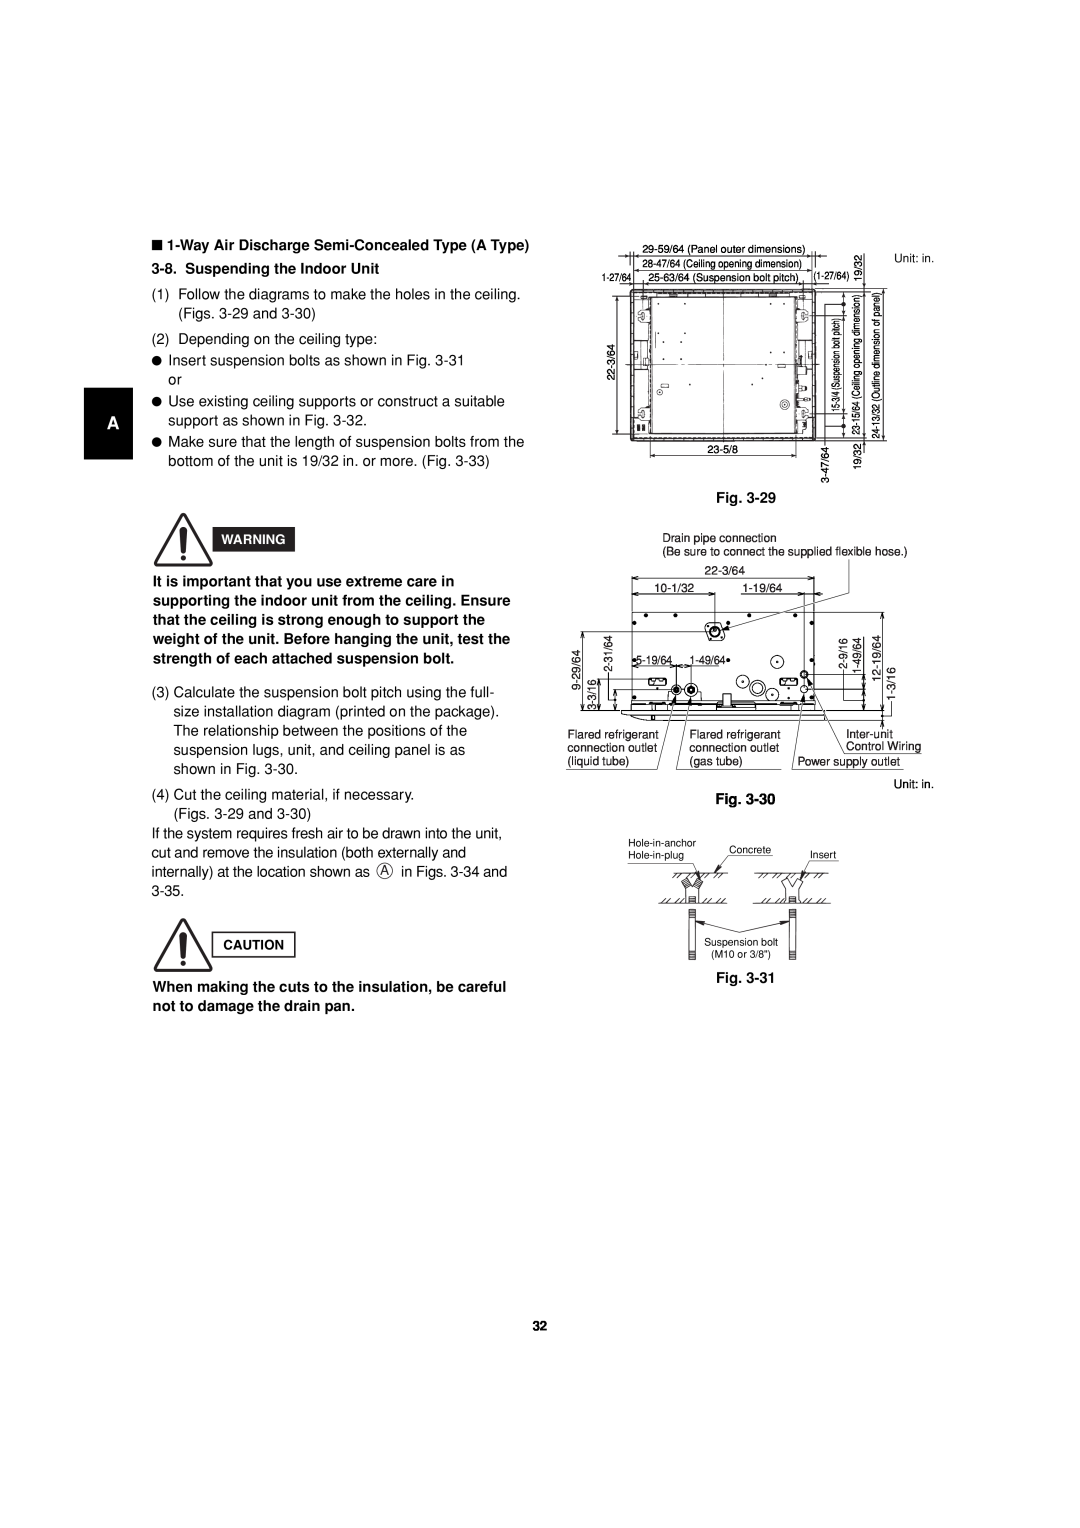 Sanyo 85464359981002 installation instructions Suspending the Indoor Unit, WayAir Discharge Semi-ConcealedType A Type, Fig 